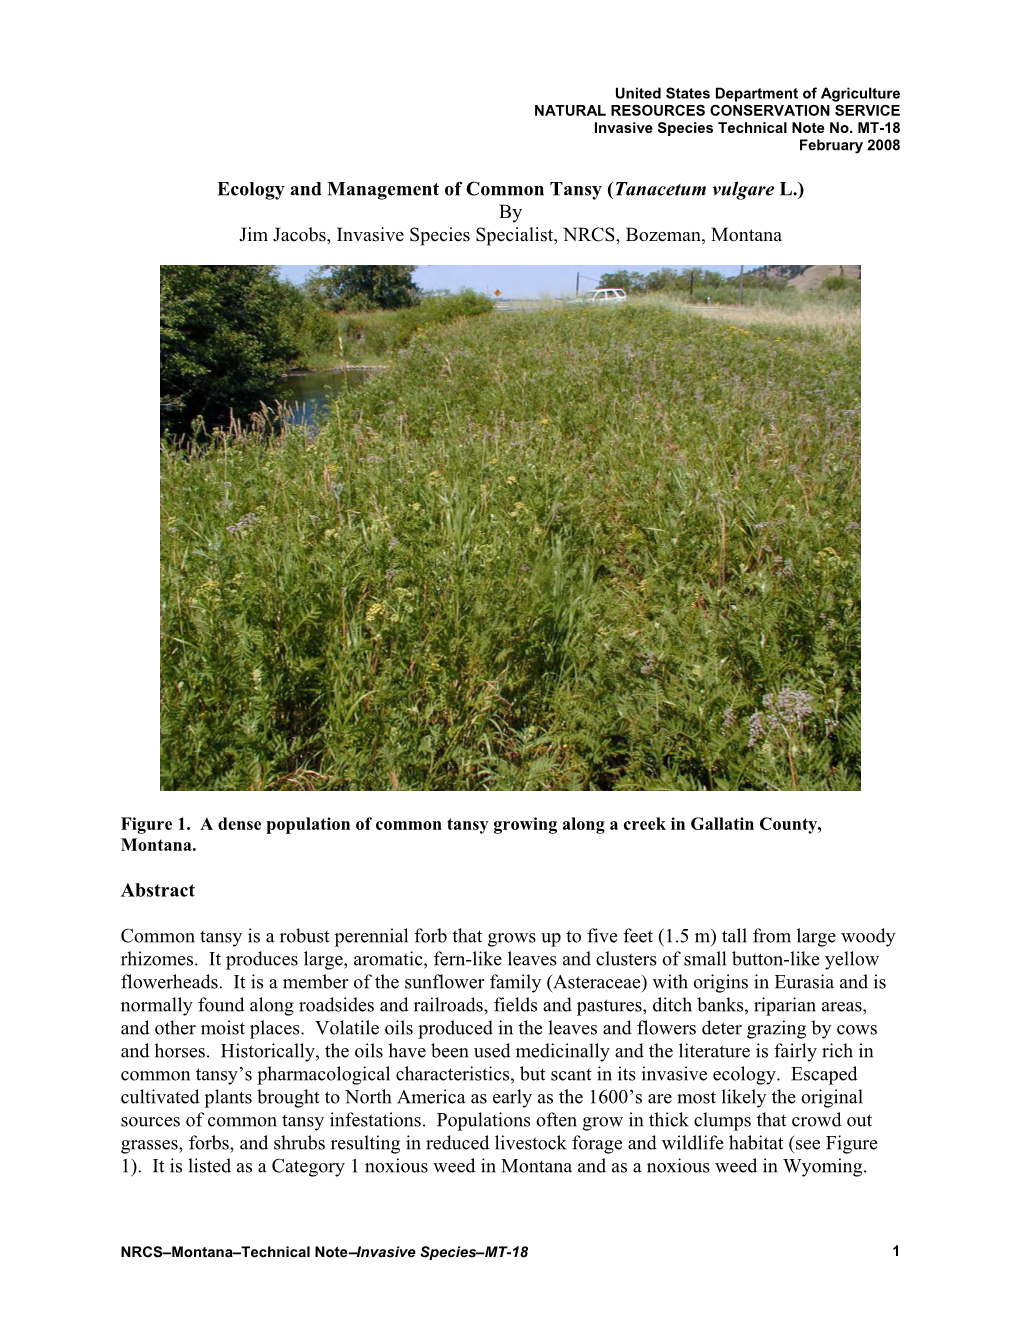 Montana Invasive Plant Species Technote